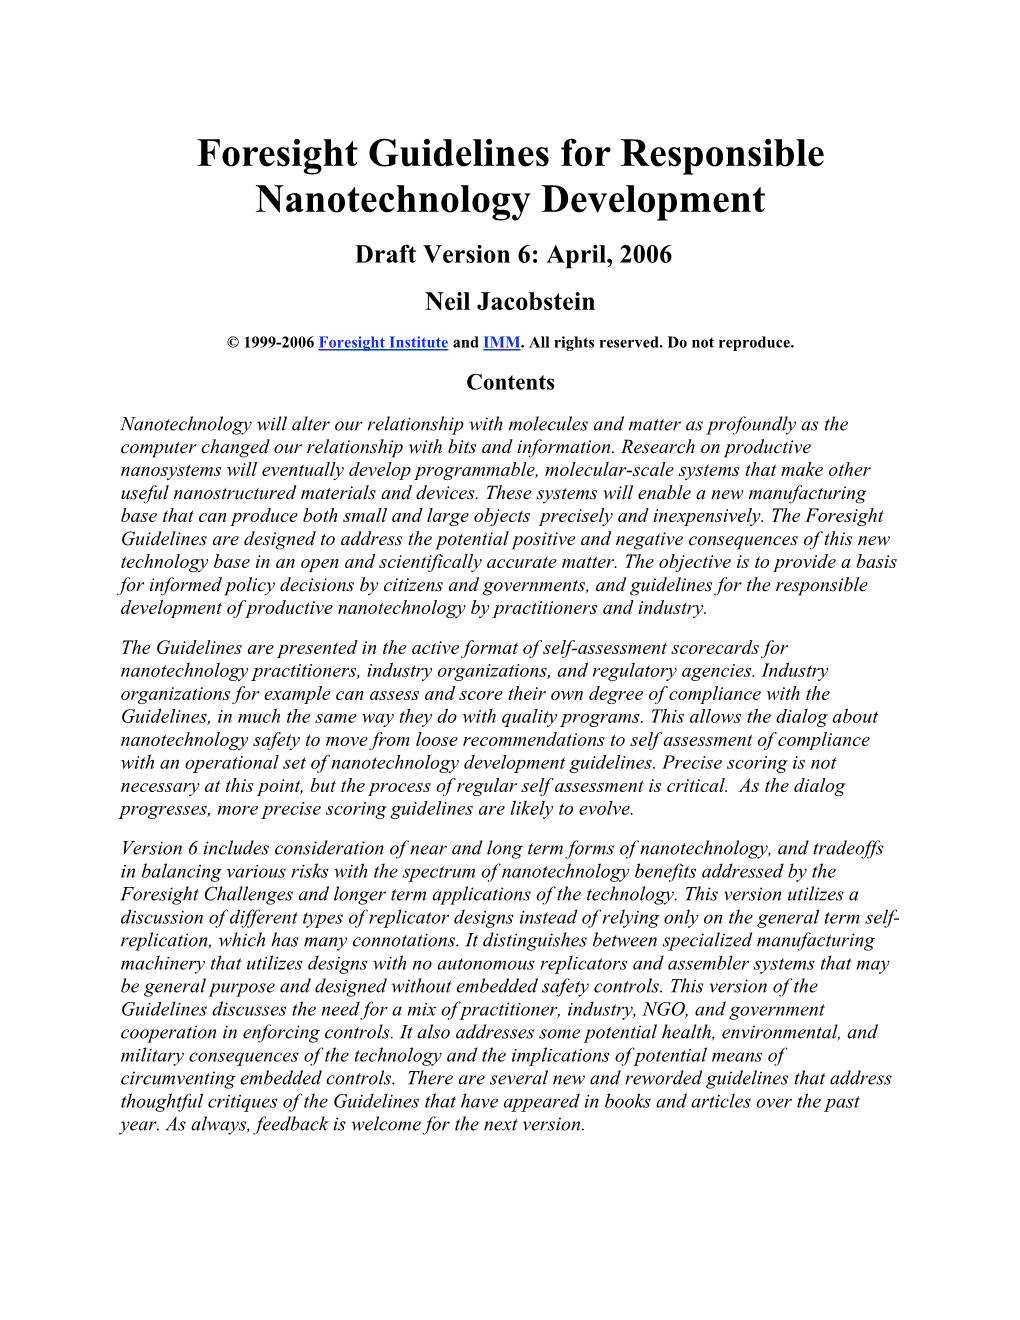 Foresight Guidelines for Responsible Nanotechnology Development Draft Version 6: April, 2006 Neil Jacobstein